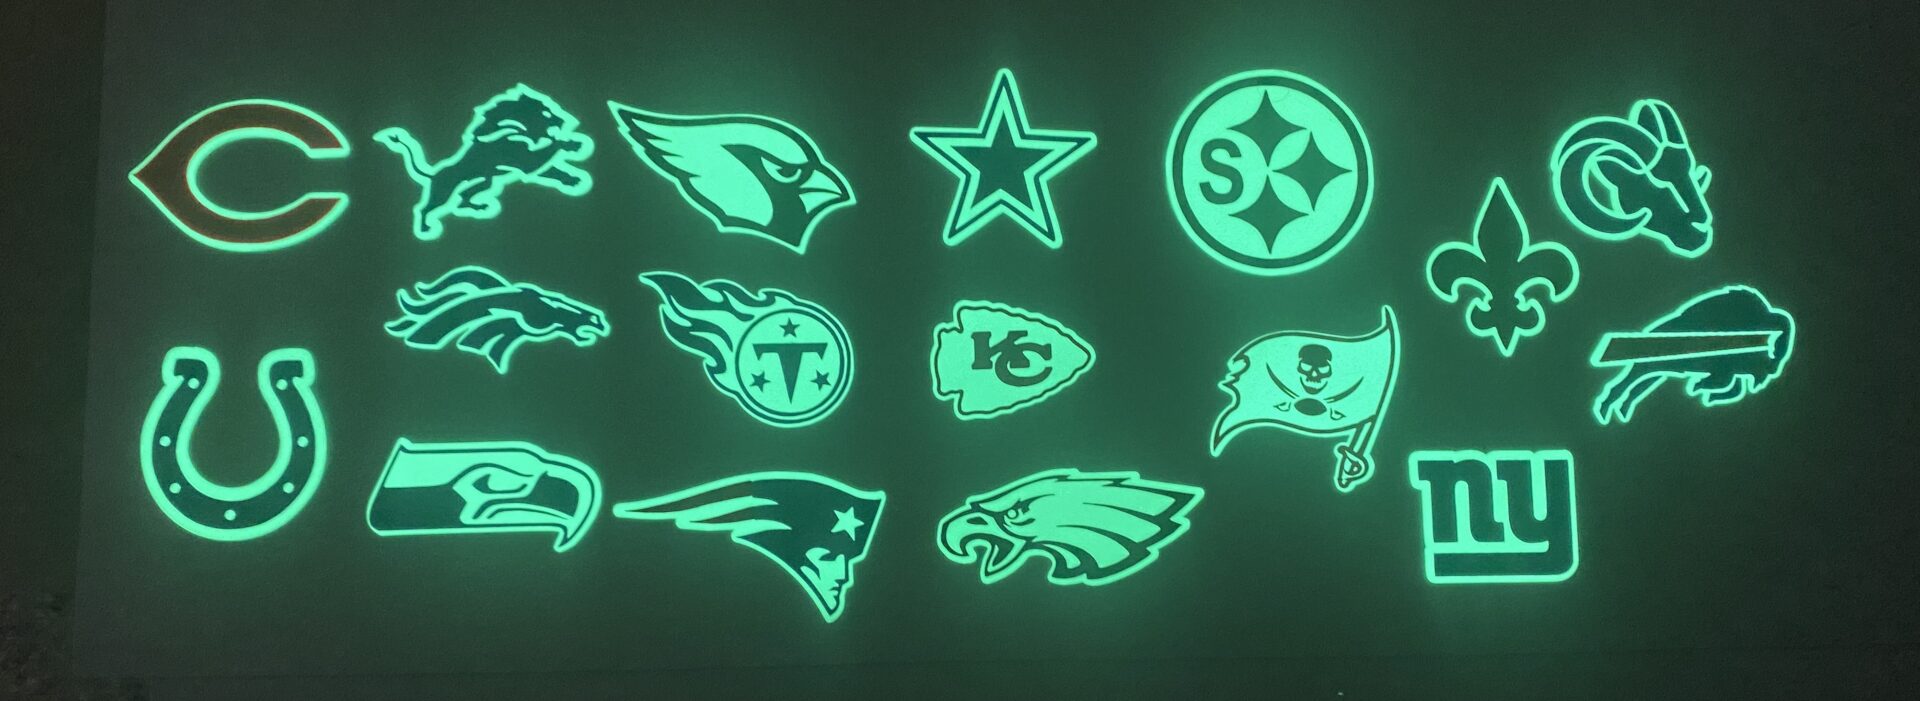 NFL Team Icons